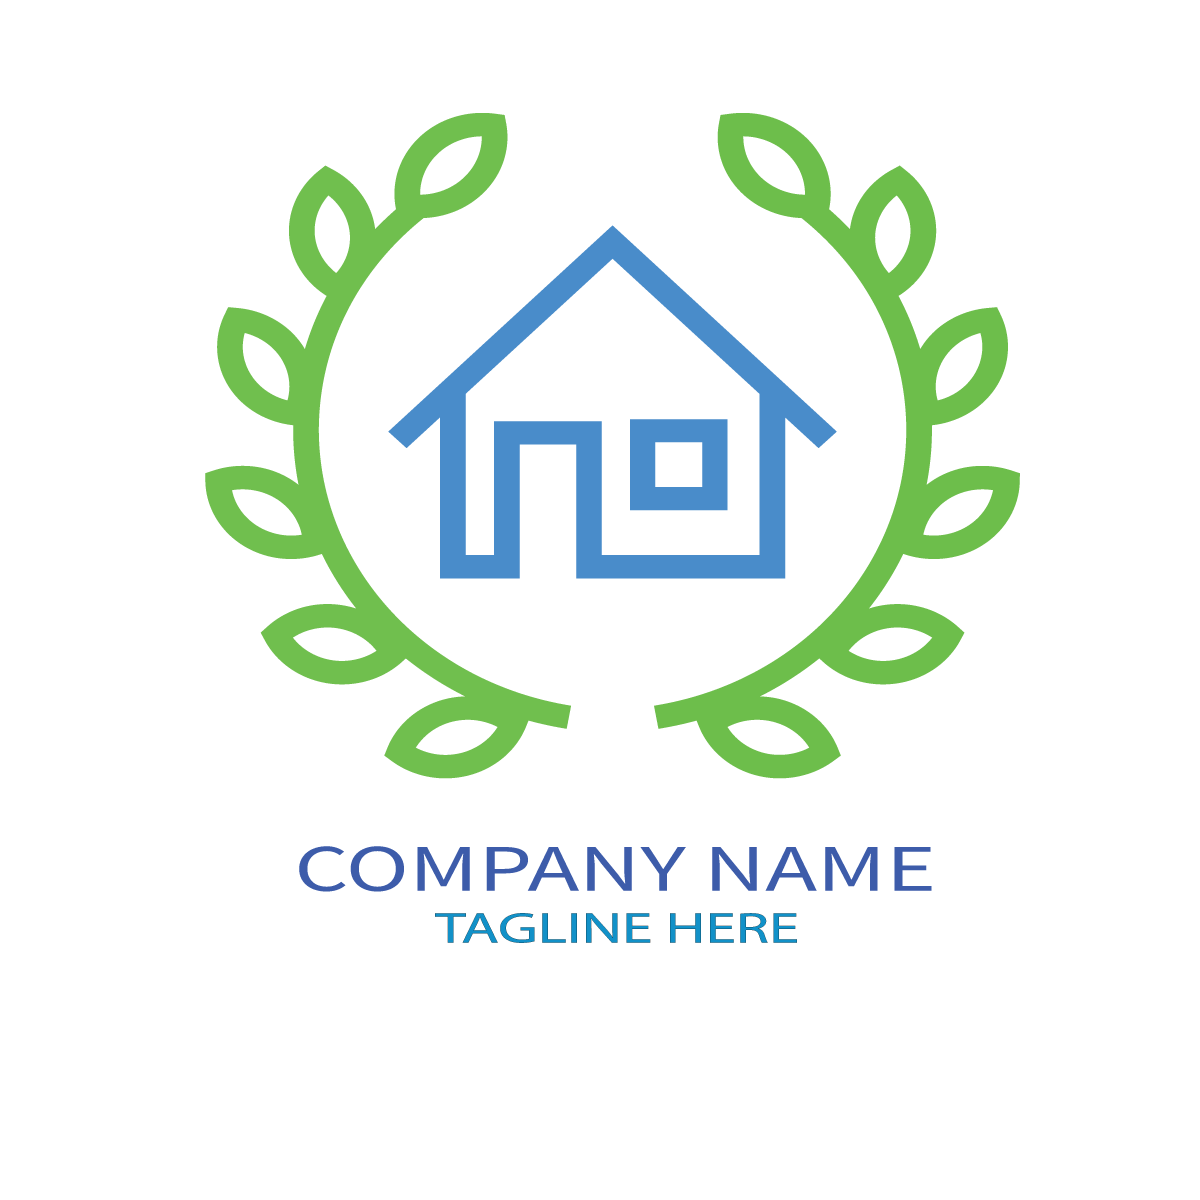 Grean Home Logo Design cover image.